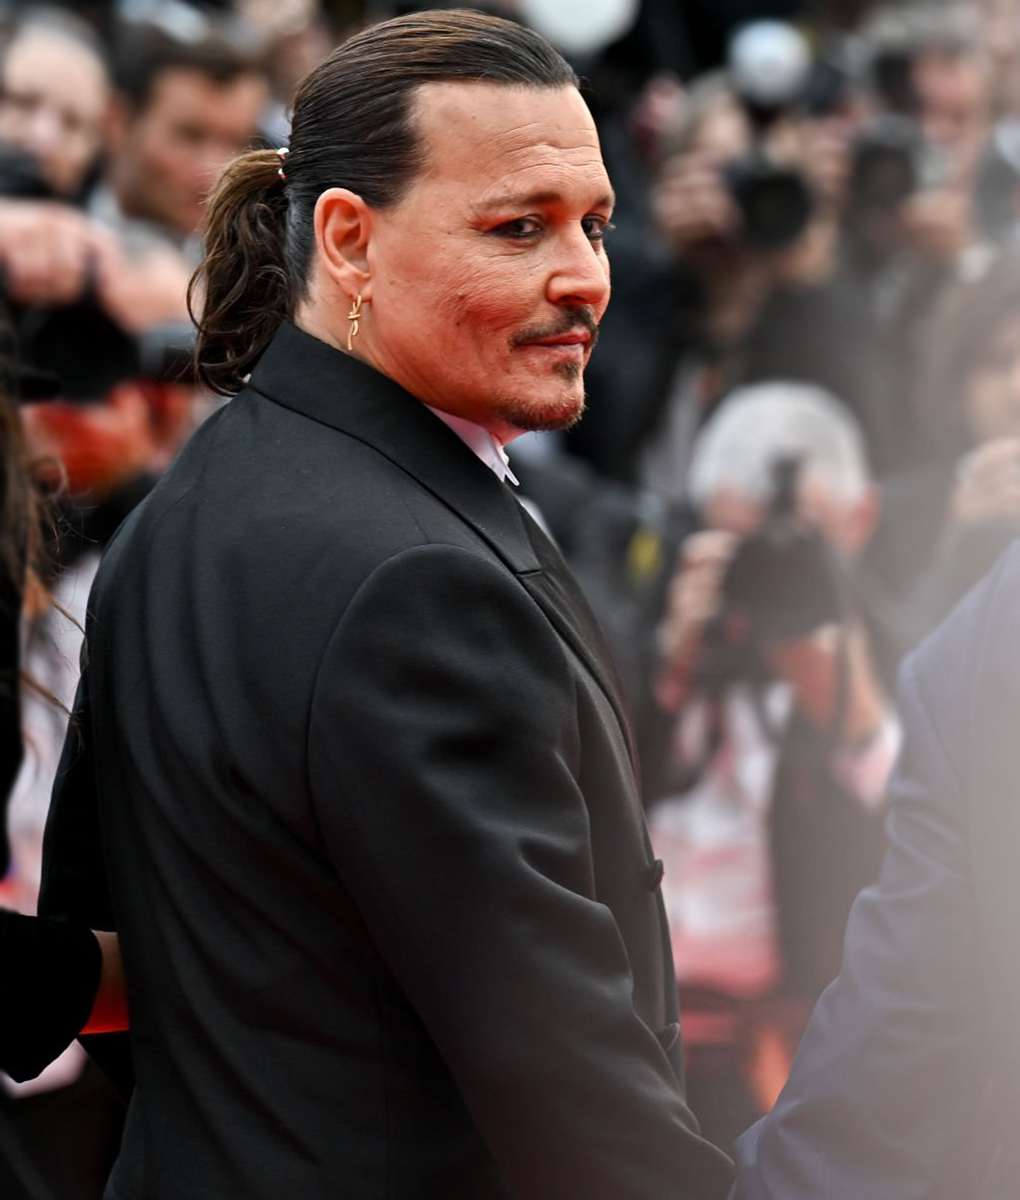 Cannes-2023-Johnny-Depp-Black-Blazer-1